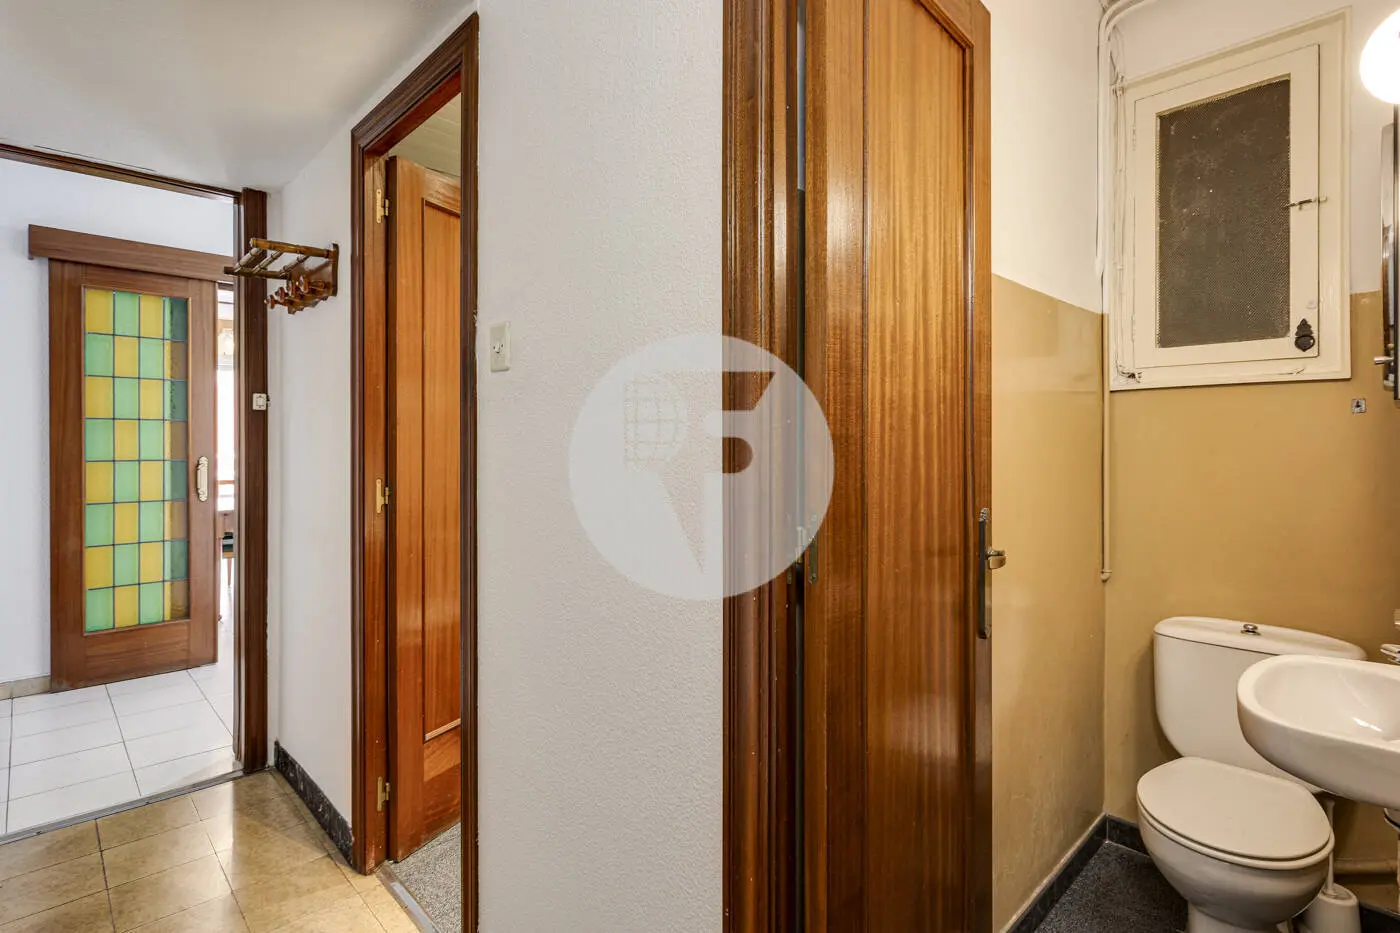 3-bedroom apartment located in the Nova Esquerra de l'Eixample neighborhood of Barcelona. 33